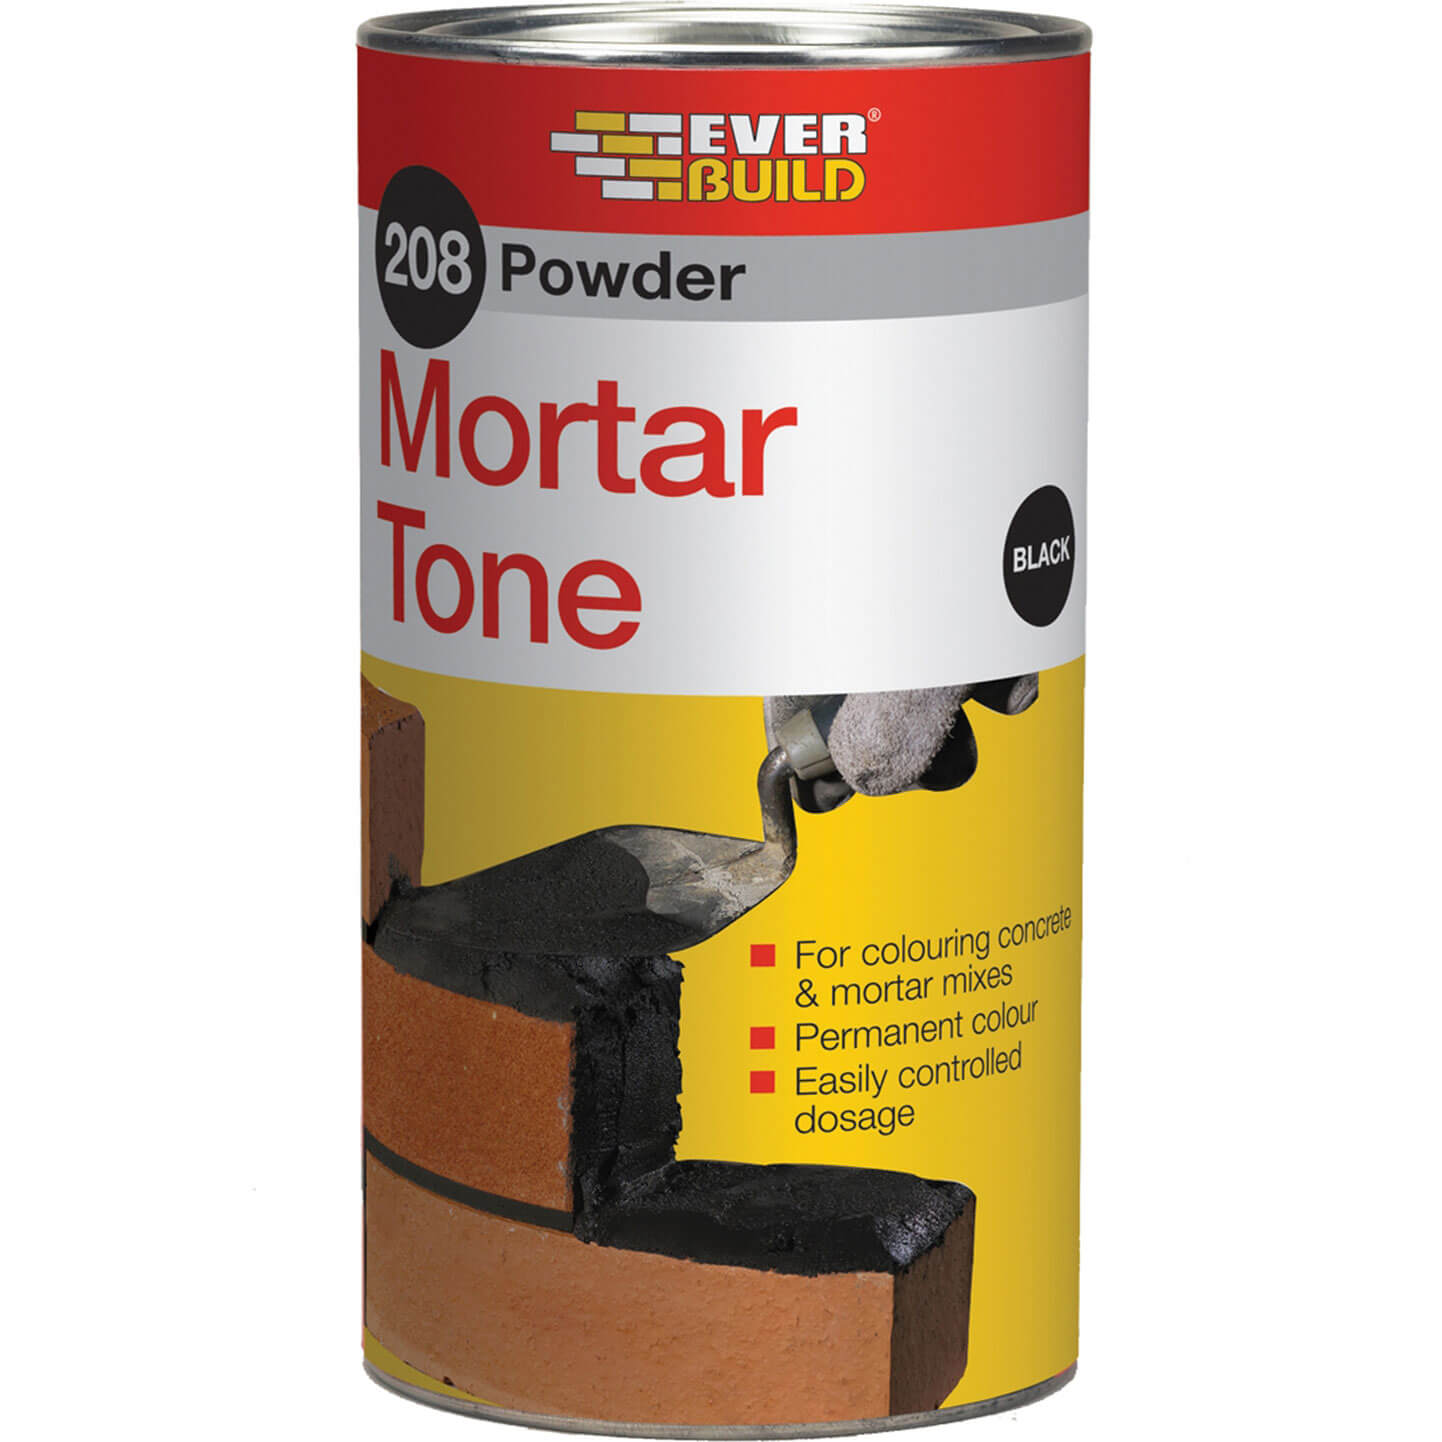 Photos - Sealant / Adhesive Everbuild Powder Mortar Tone Buff for Colouring Mortar 1kg EVBPMTBF1 